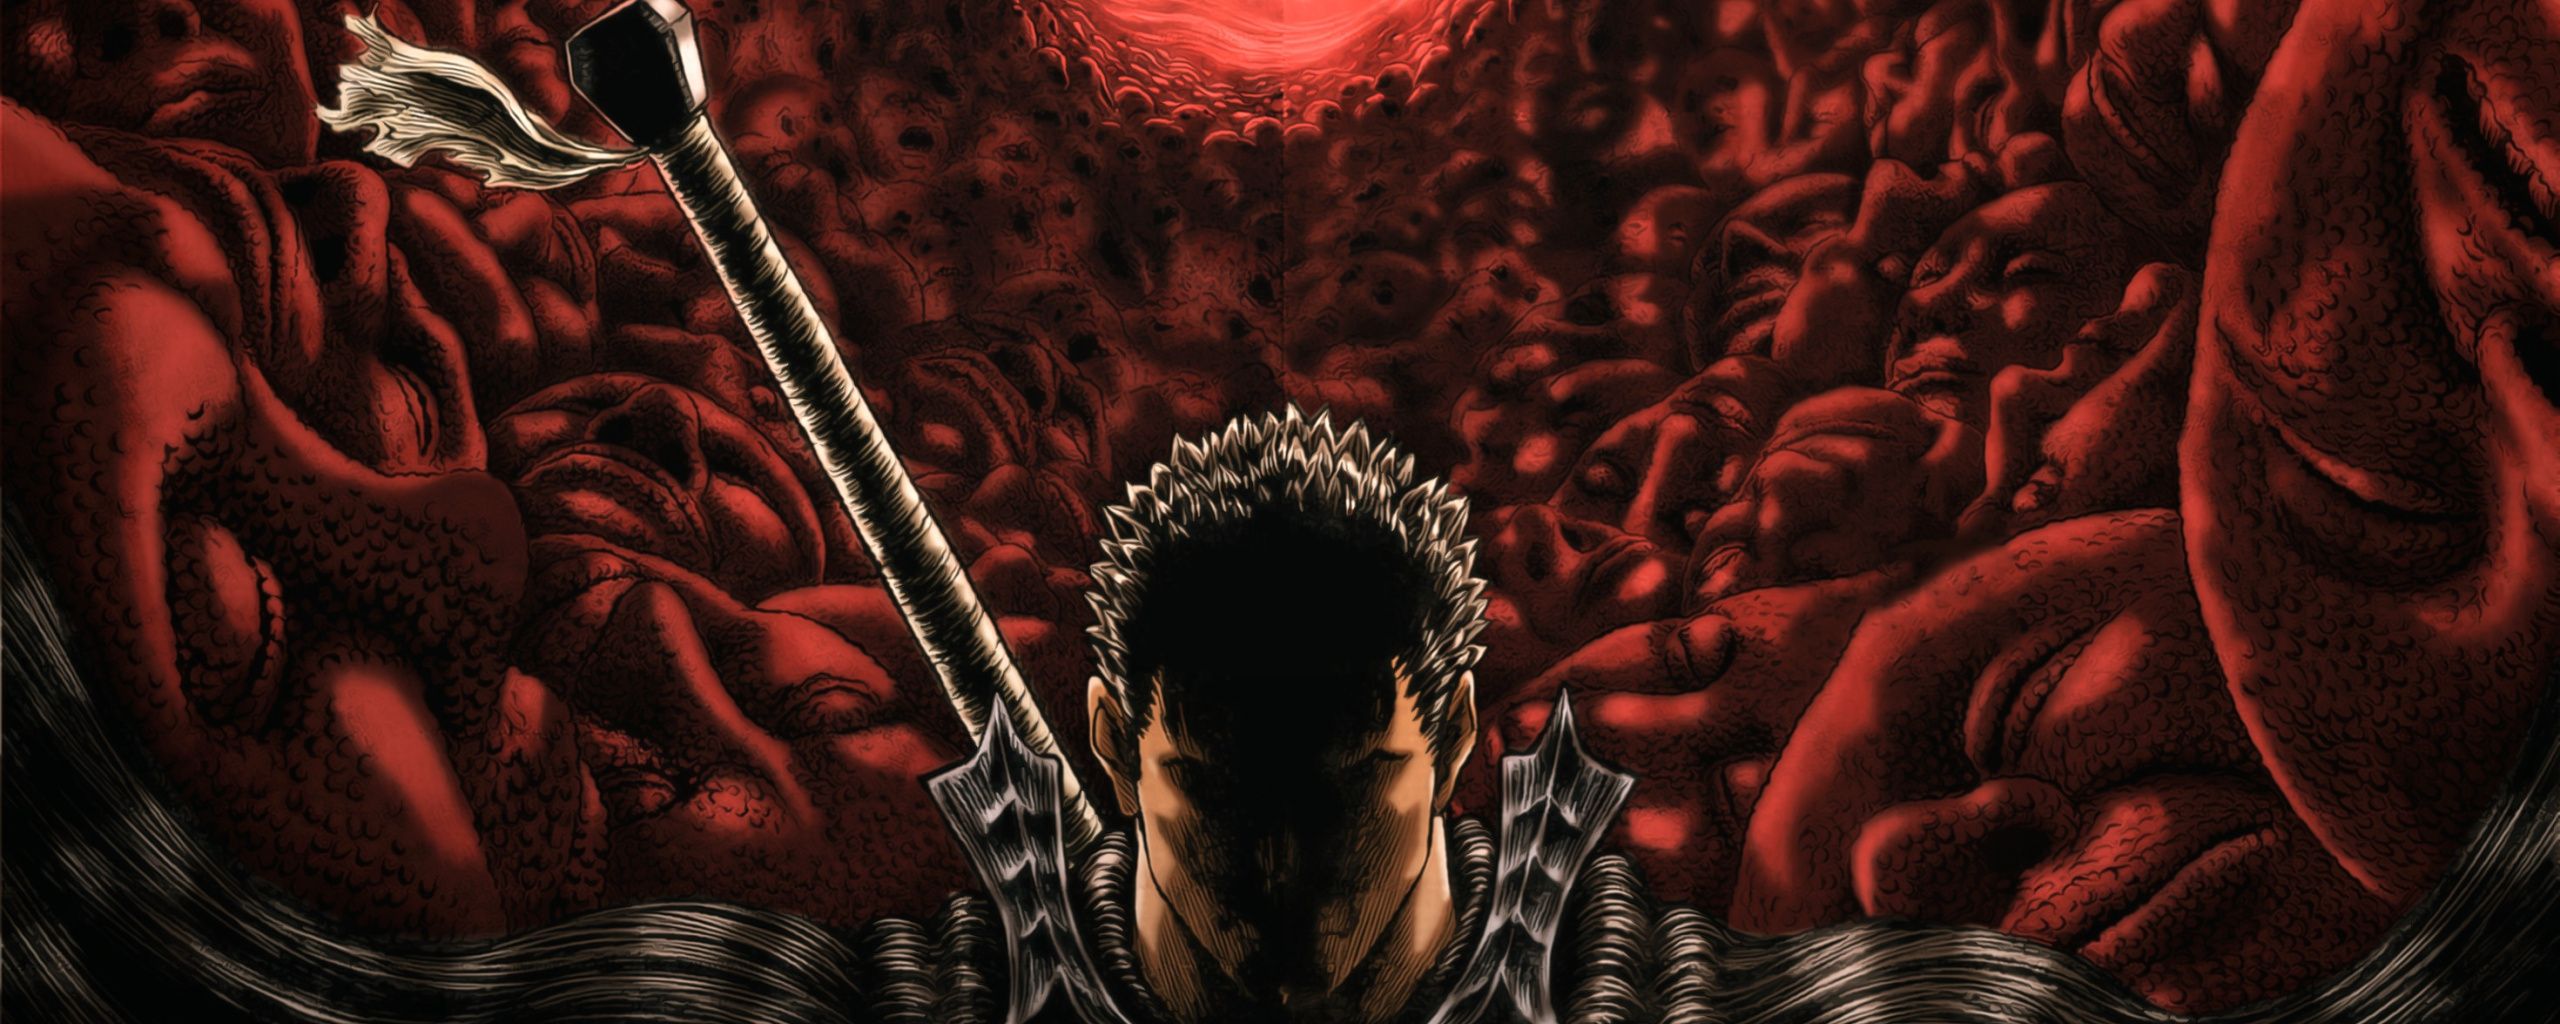 Download Berserk, anime, dark, warrior wallpaper, 2560x Dual